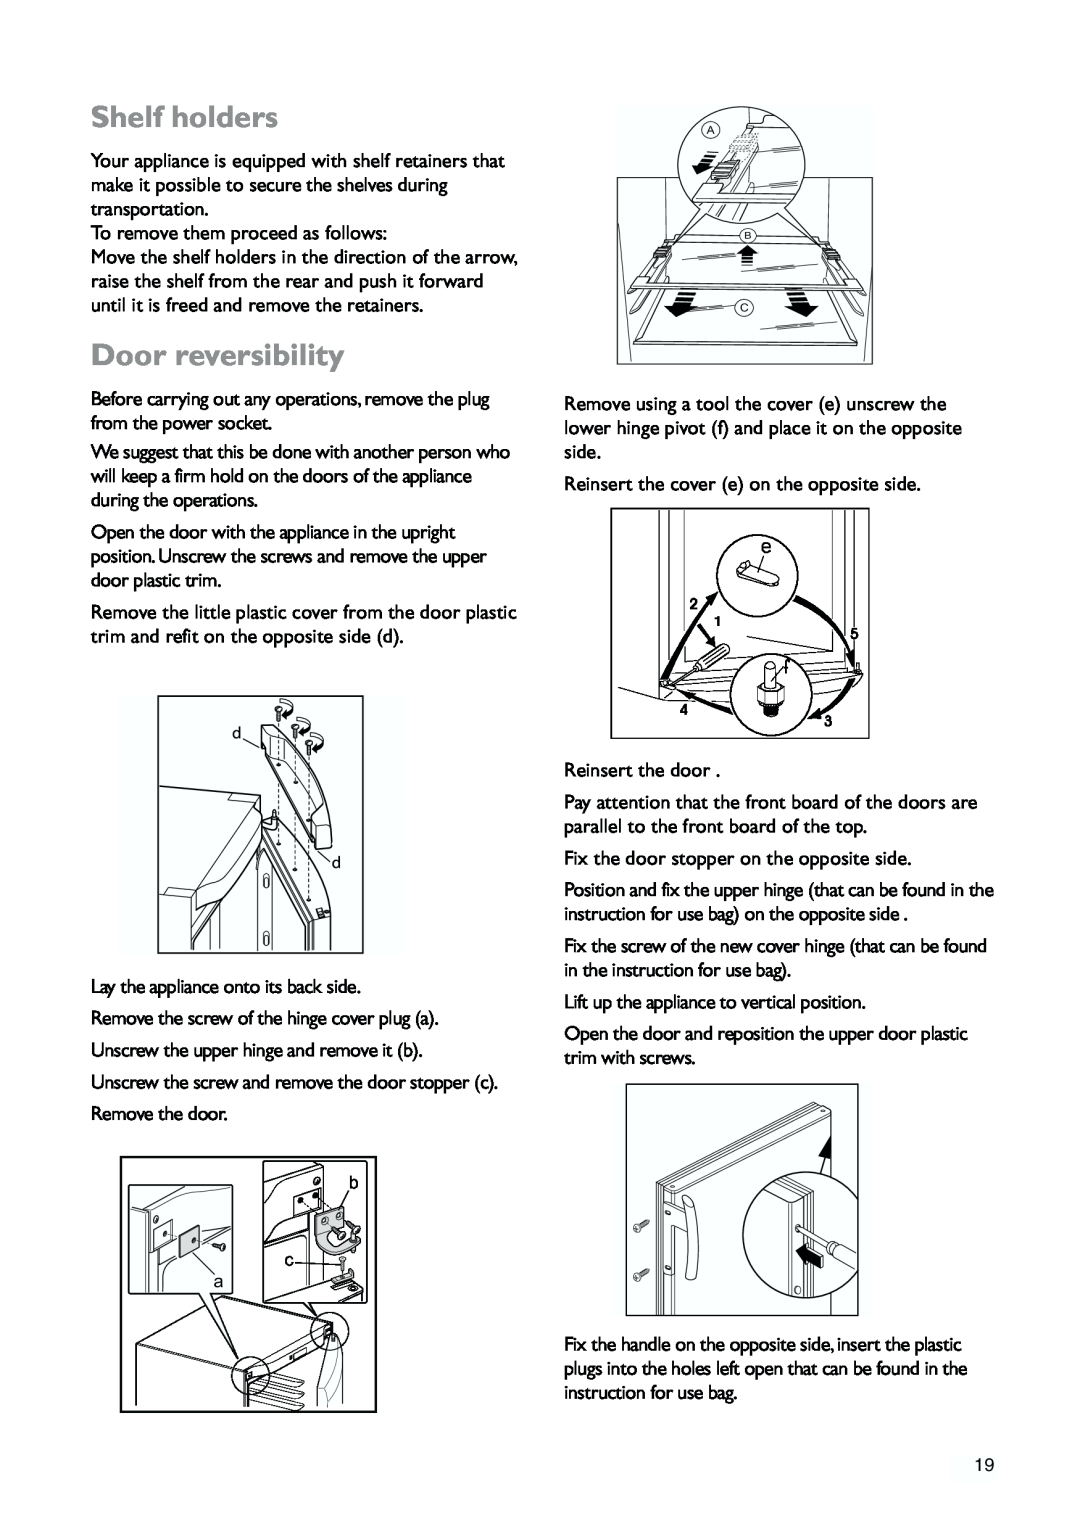 John Lewis JLLFW1809 instruction manual Shelf holders, Door reversibility 